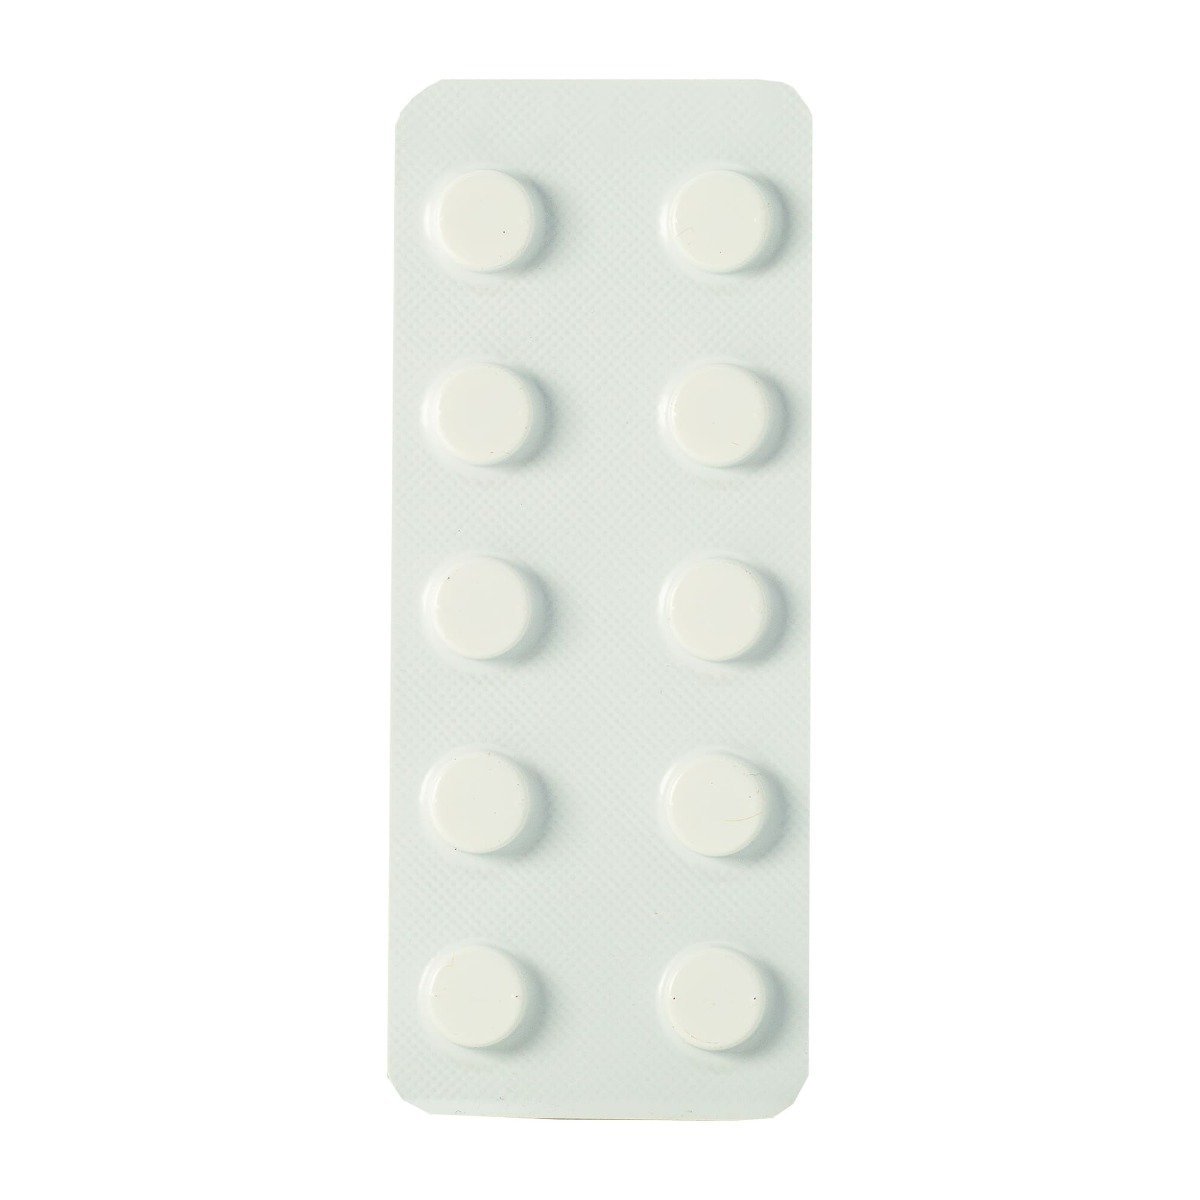 Aggrex 75 mg - 60 Tablets - Bloom Pharmacy